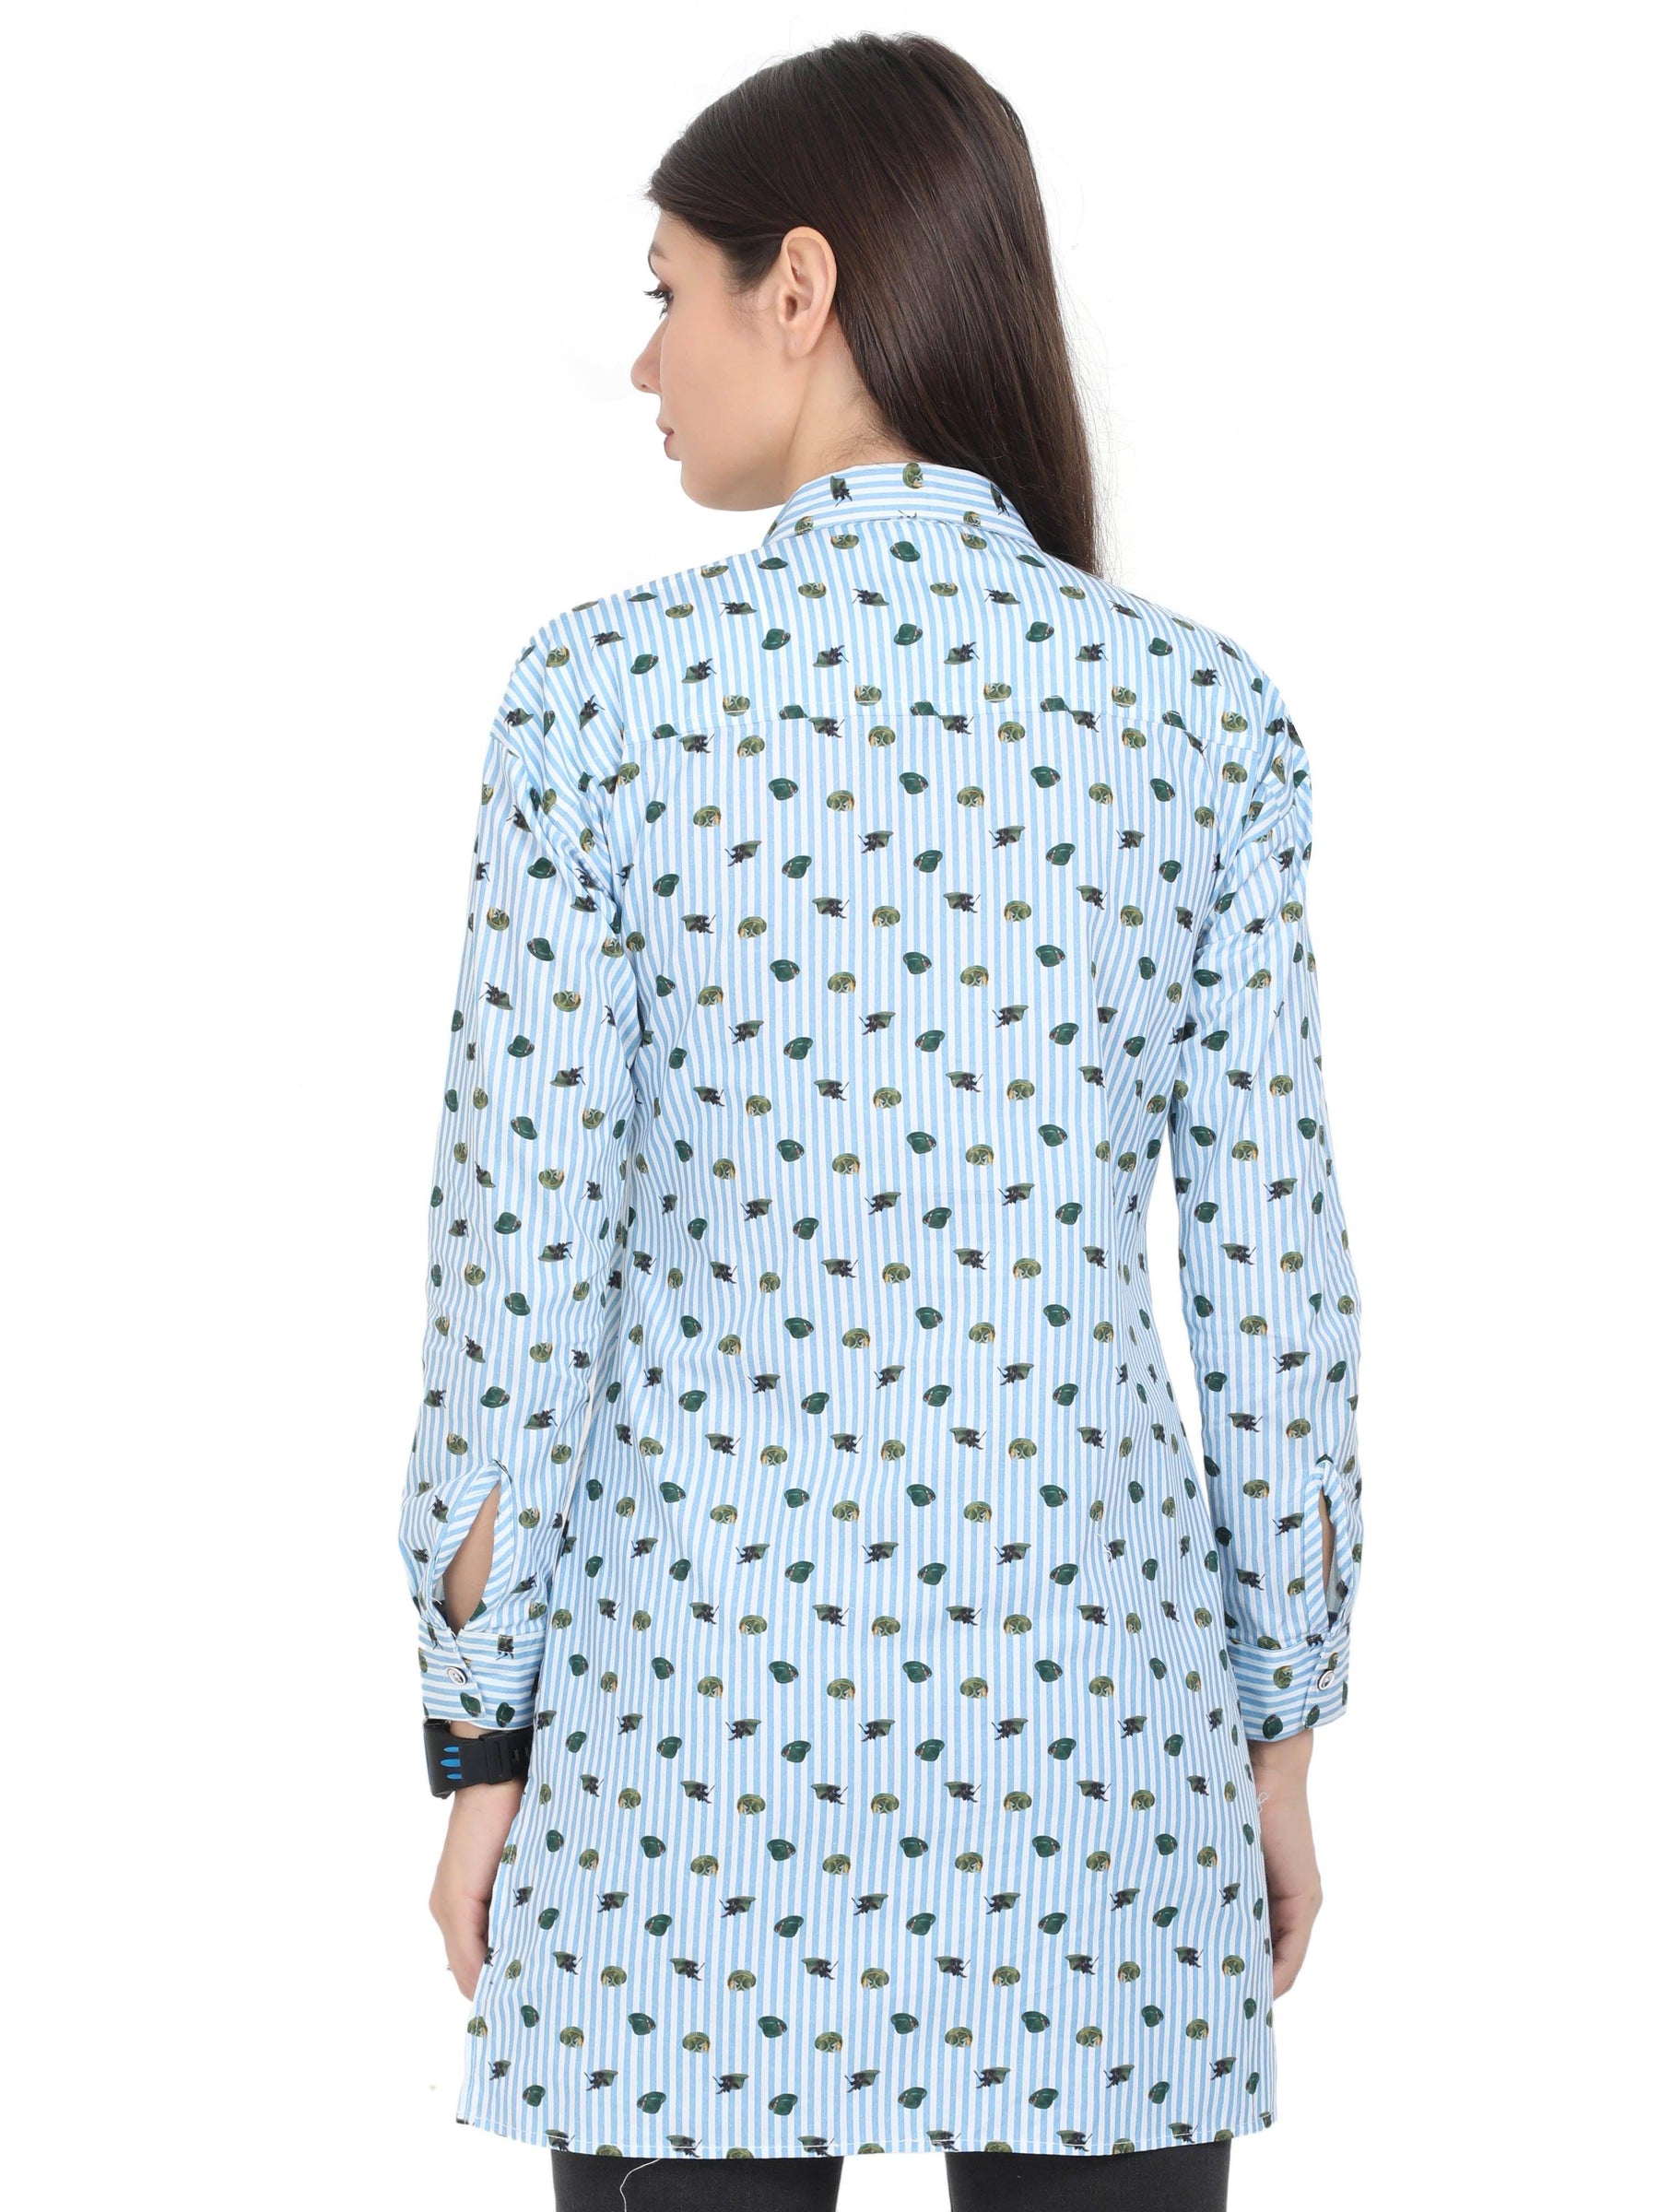 Light Blue Digital Printed Tailored Fit Long Shirt - Guniaa Fashions